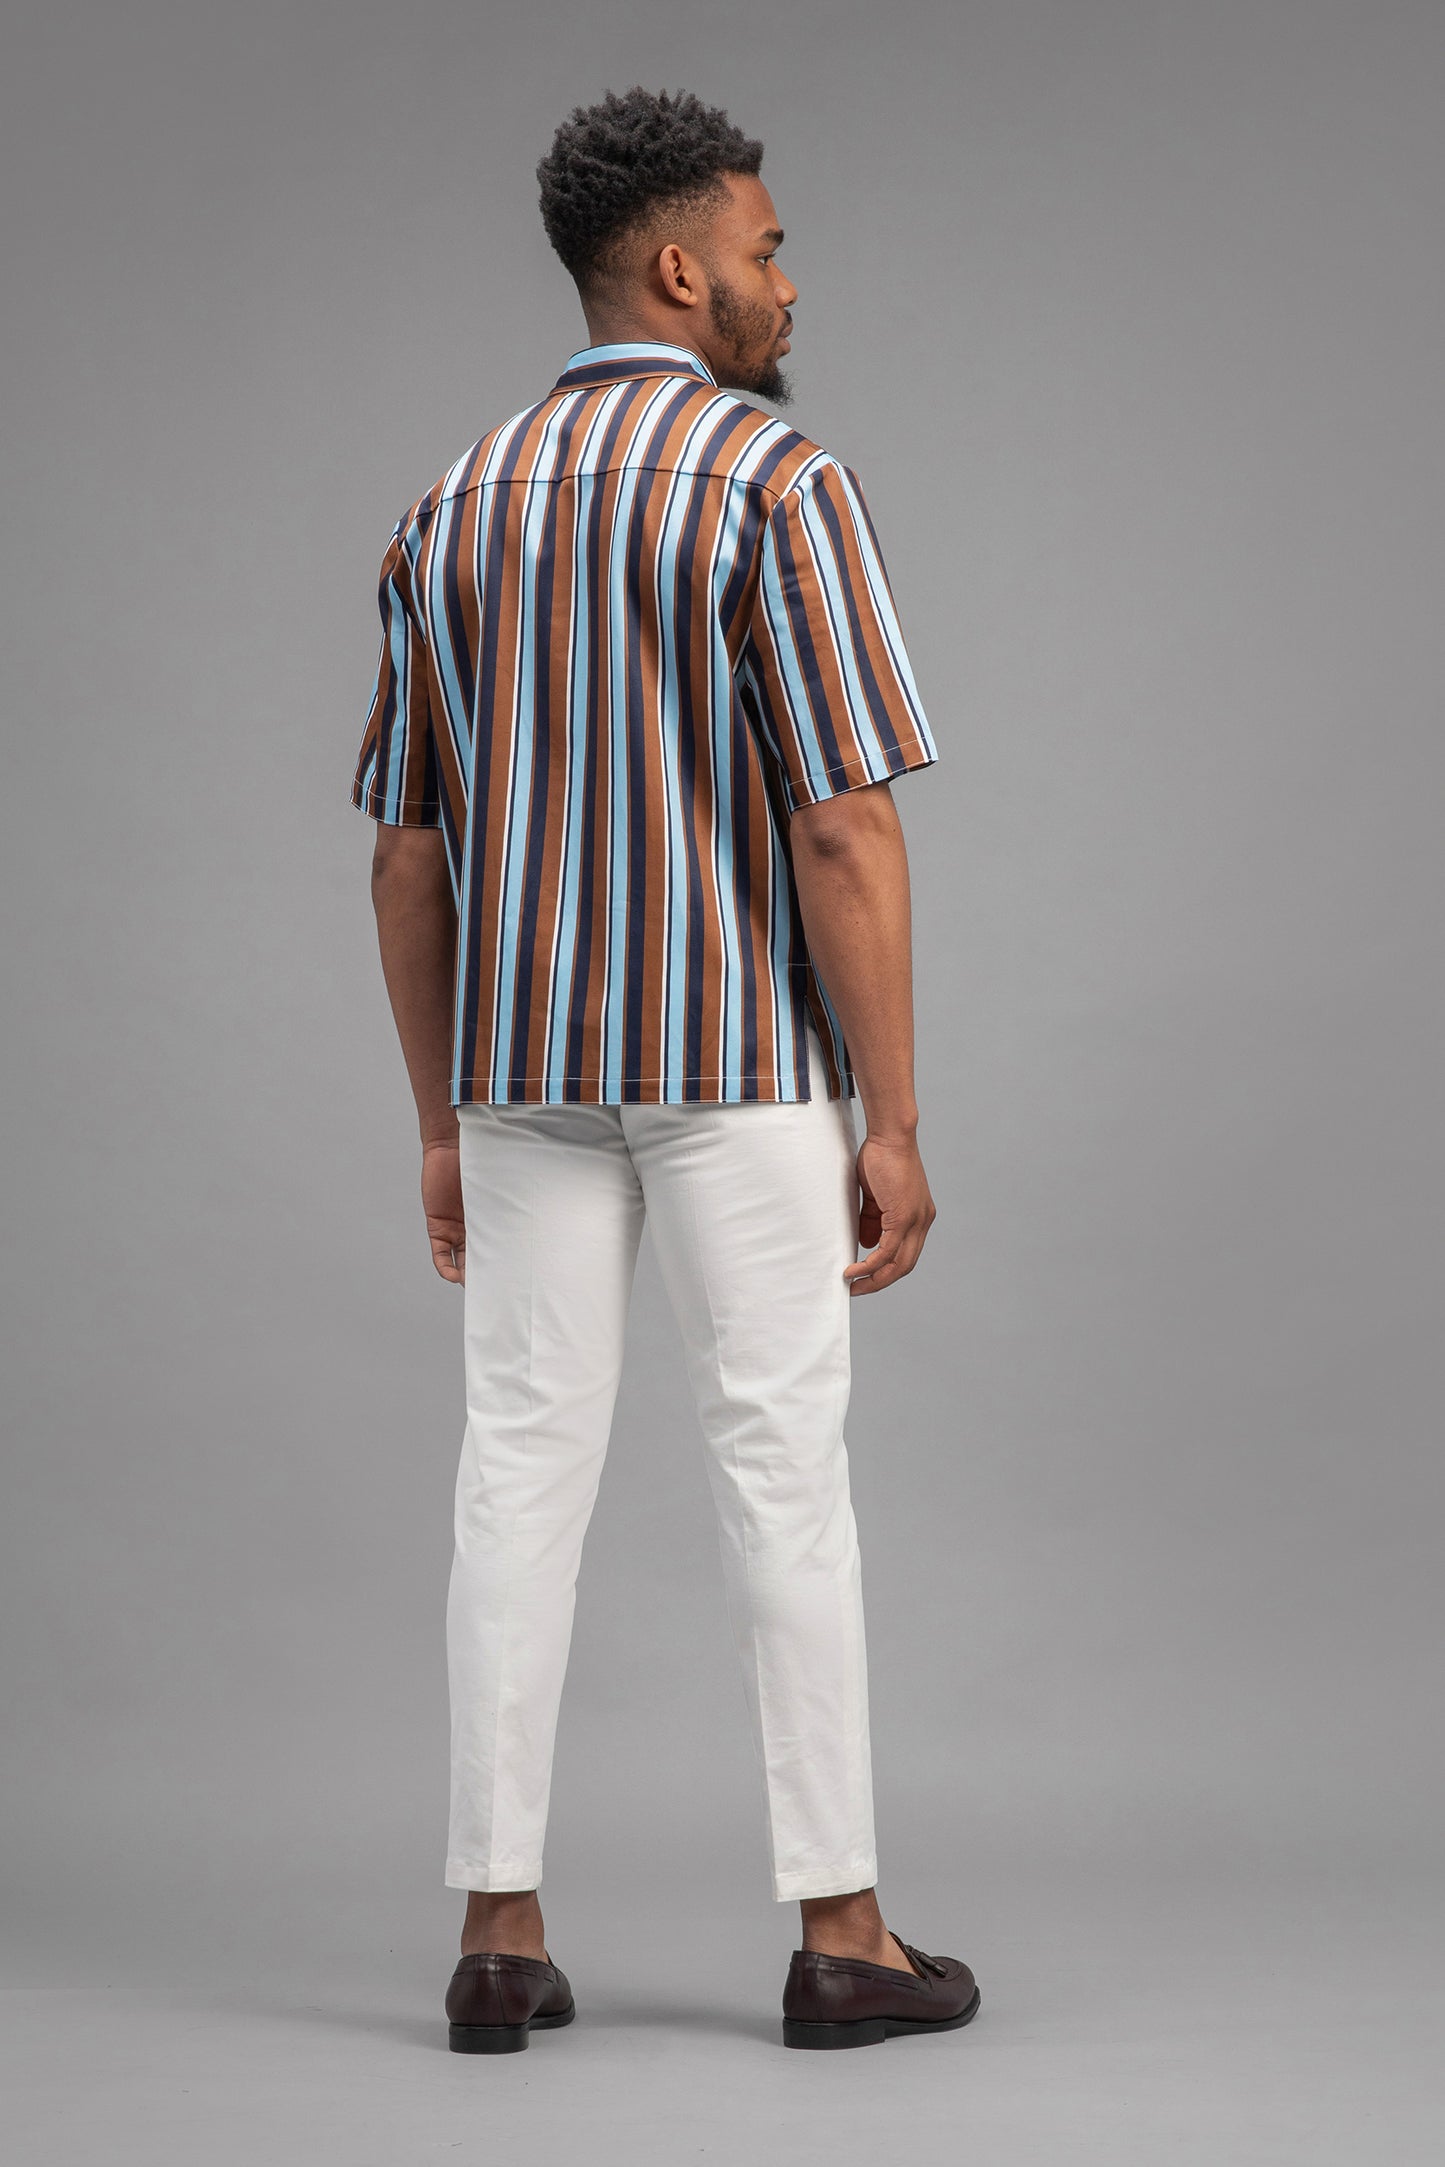 Saint-Tropez - Colored Striped Bowling Shirt